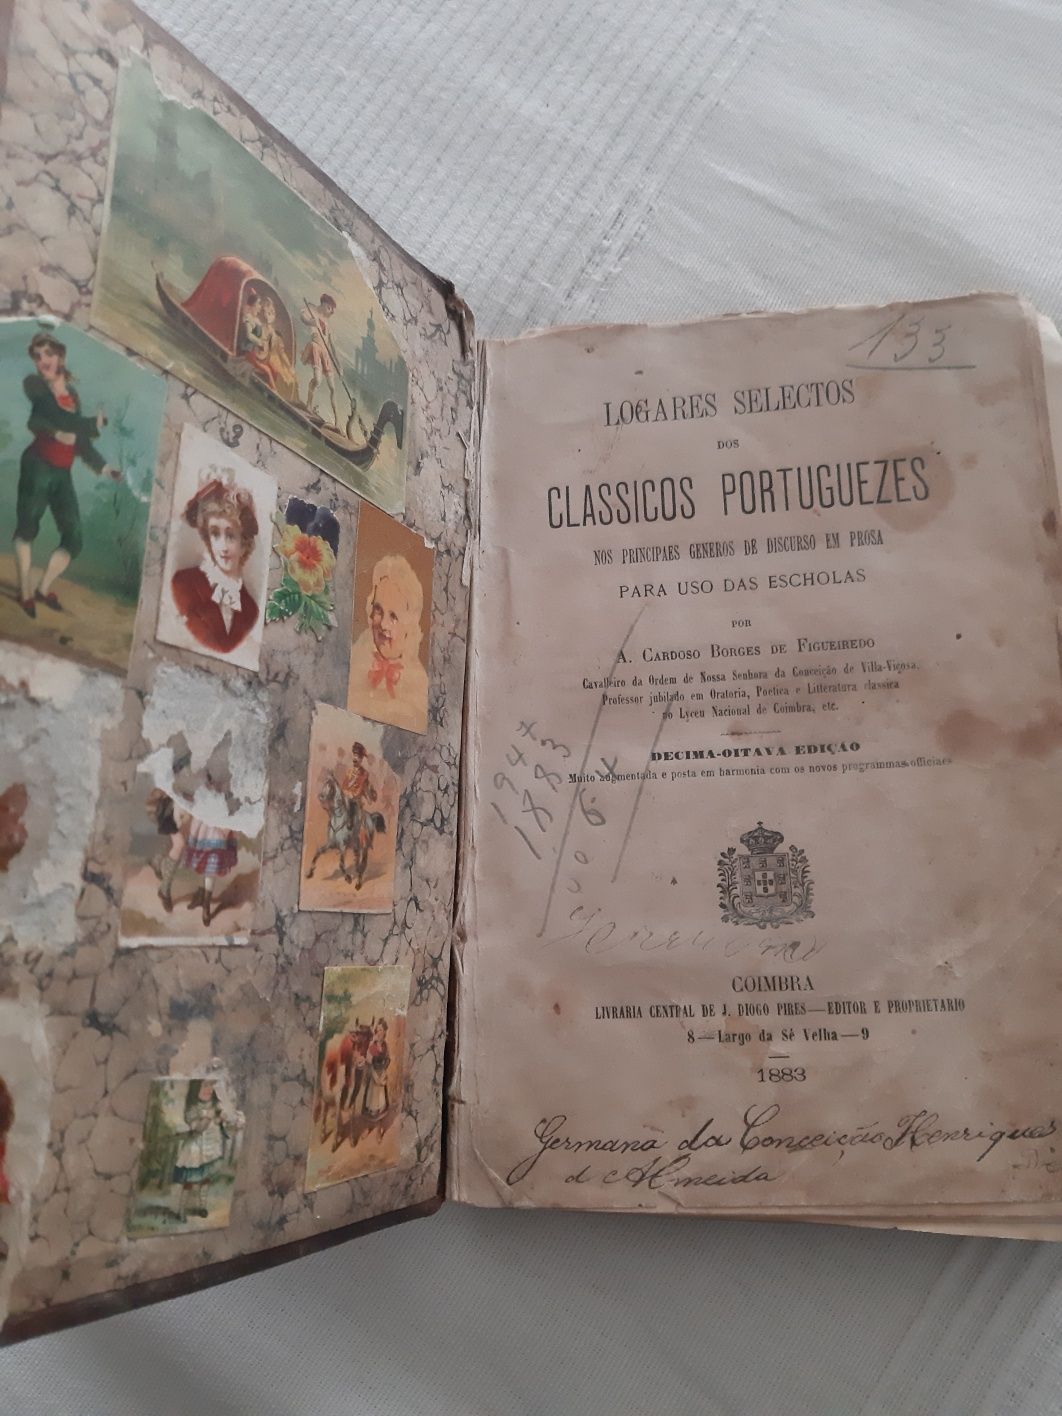 Livro raro 1883 logares selectos dos classicos portuguezes